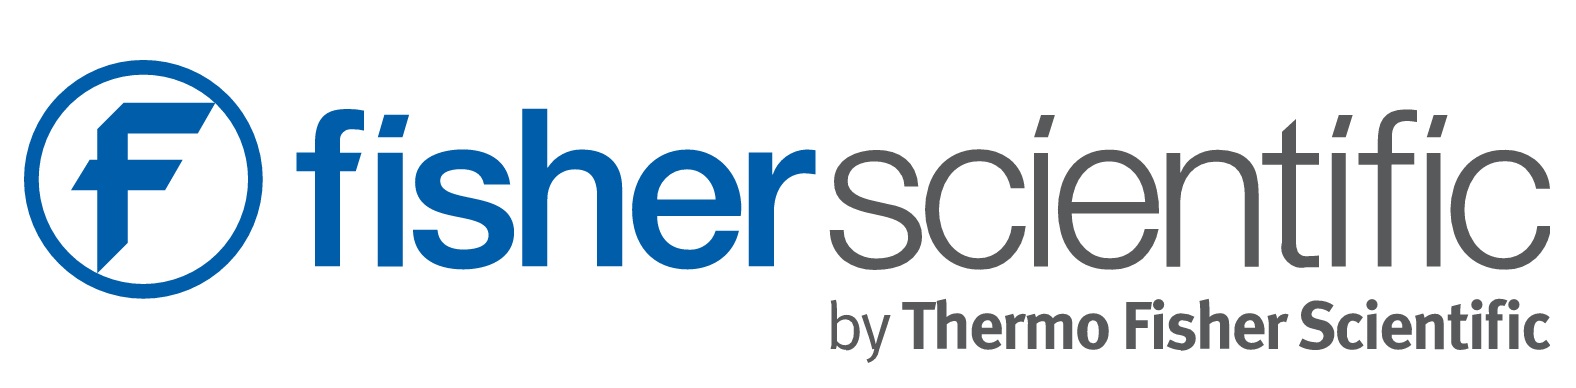 Fisher Scientific 2017 logo.jpg